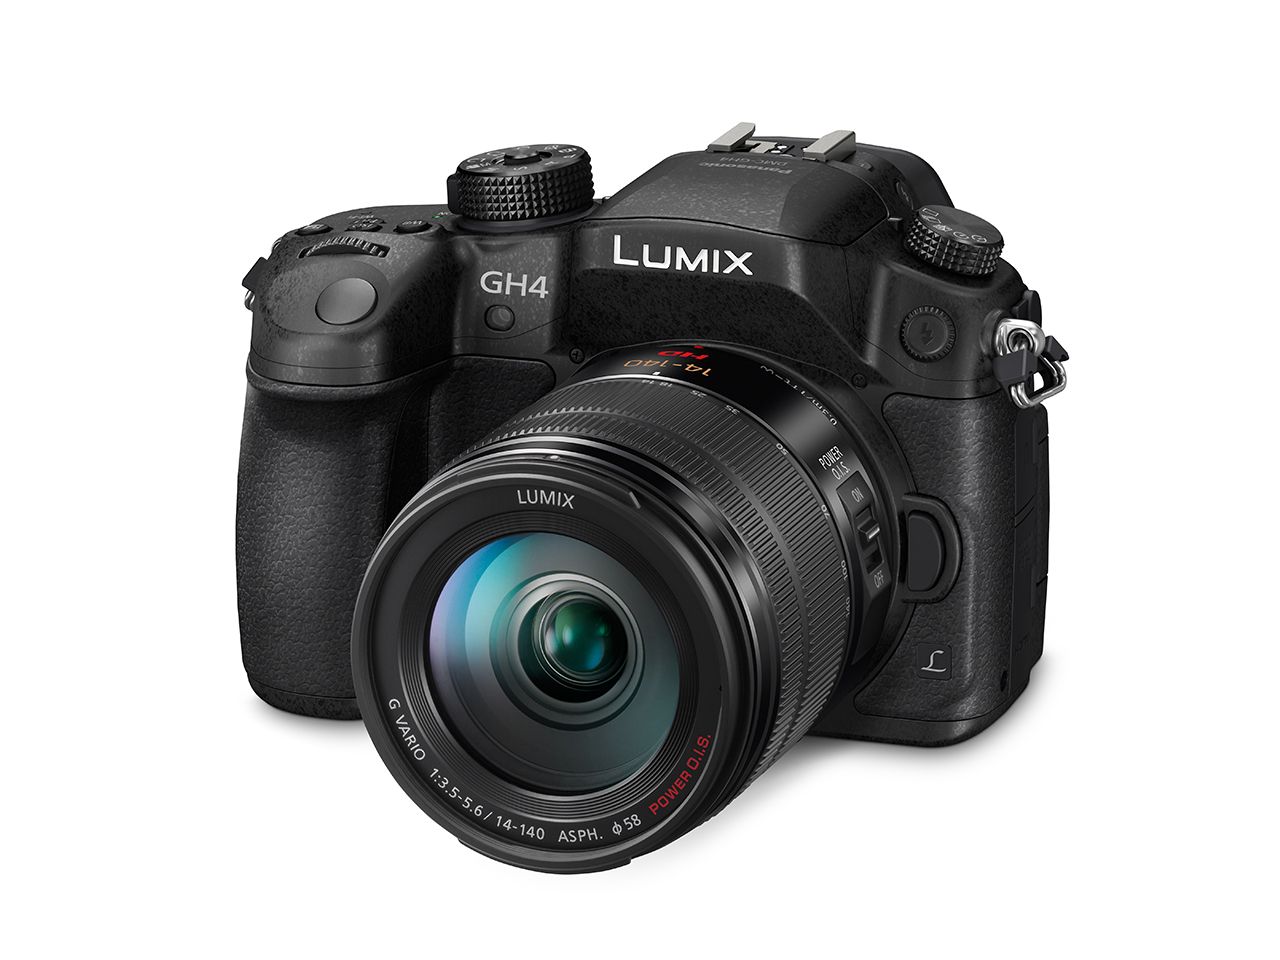 panasonic lumix gh4 brings 4k video to the mirrorless camera 1080p beyond broadcast quality image 1